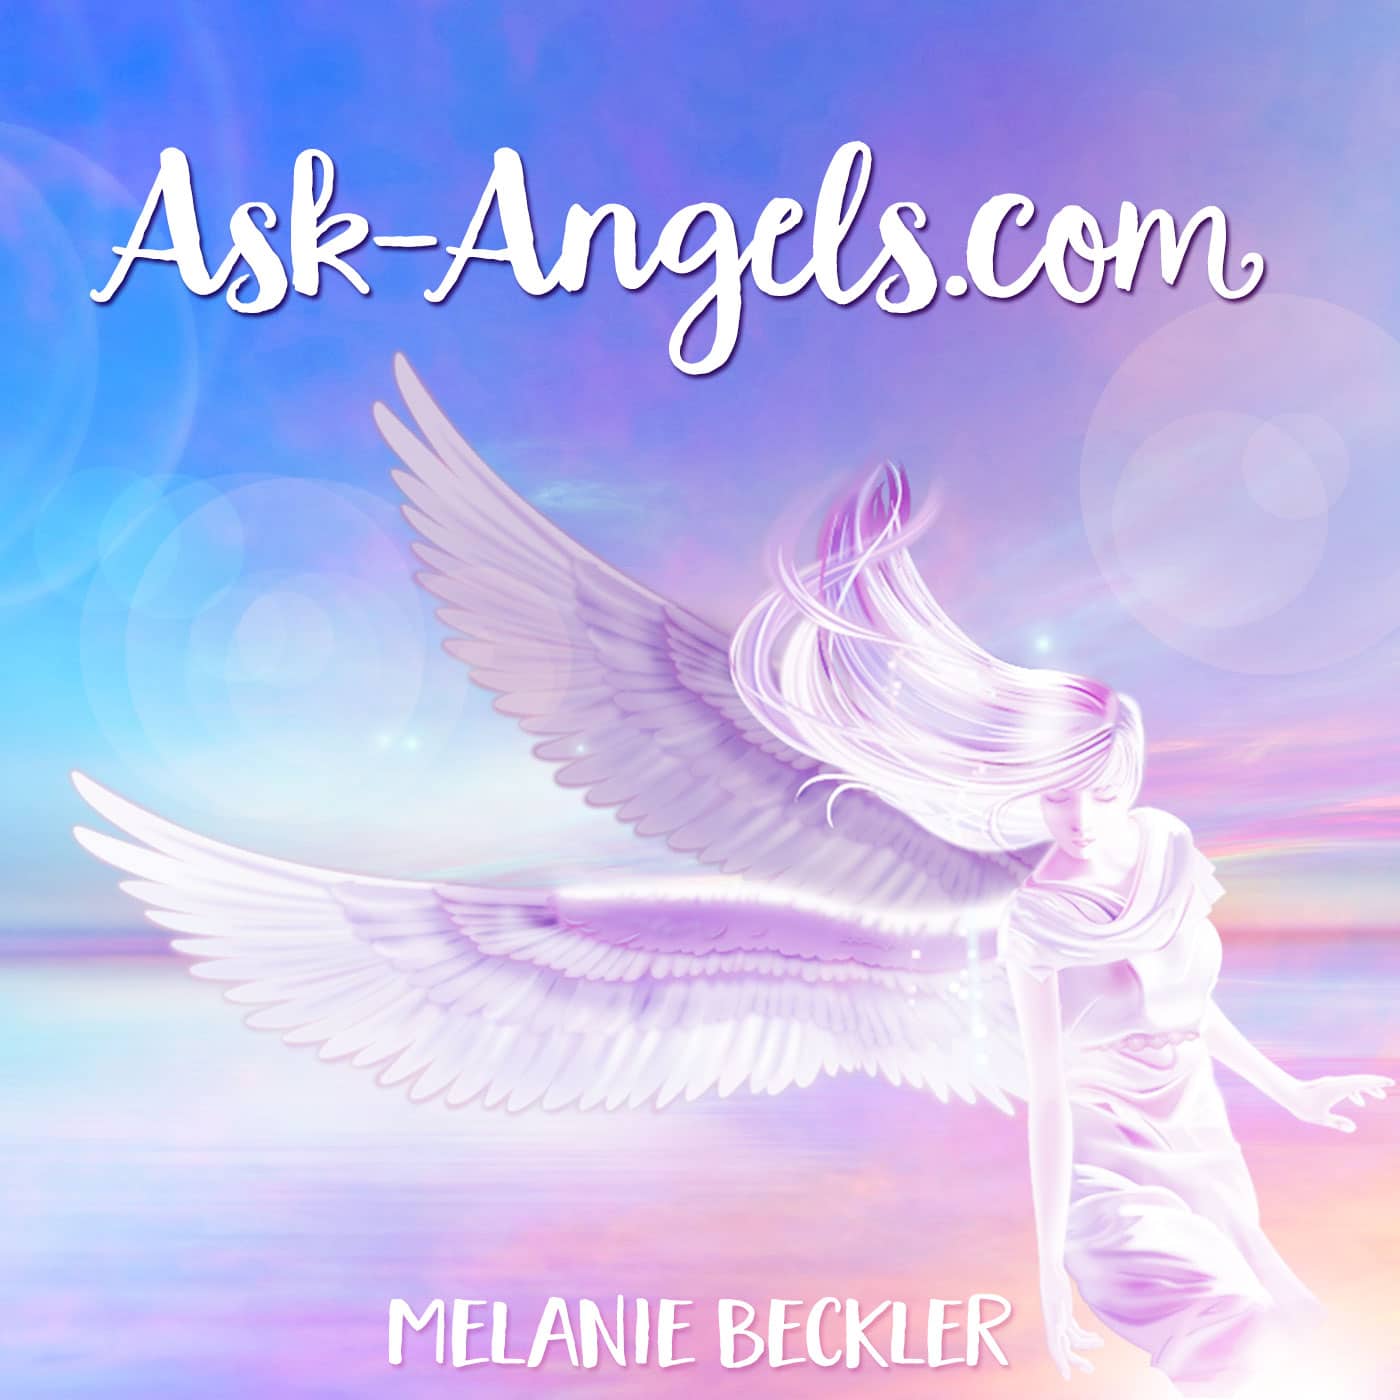 www.Ask-Angels.com